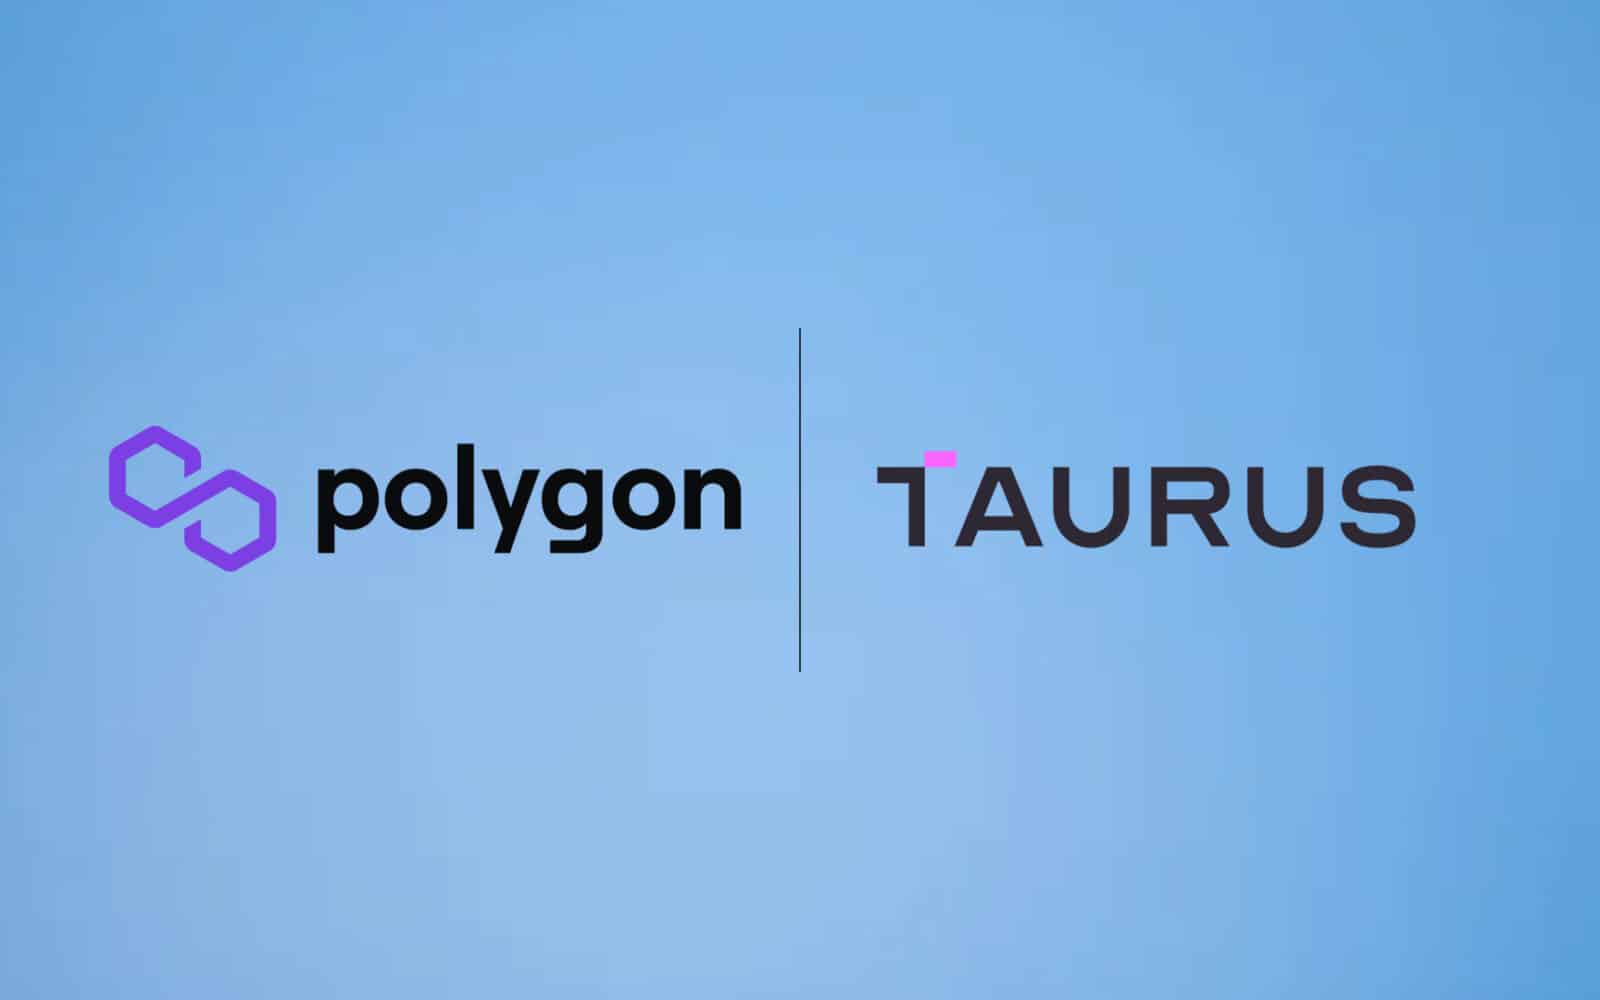 Polygon - Taurus